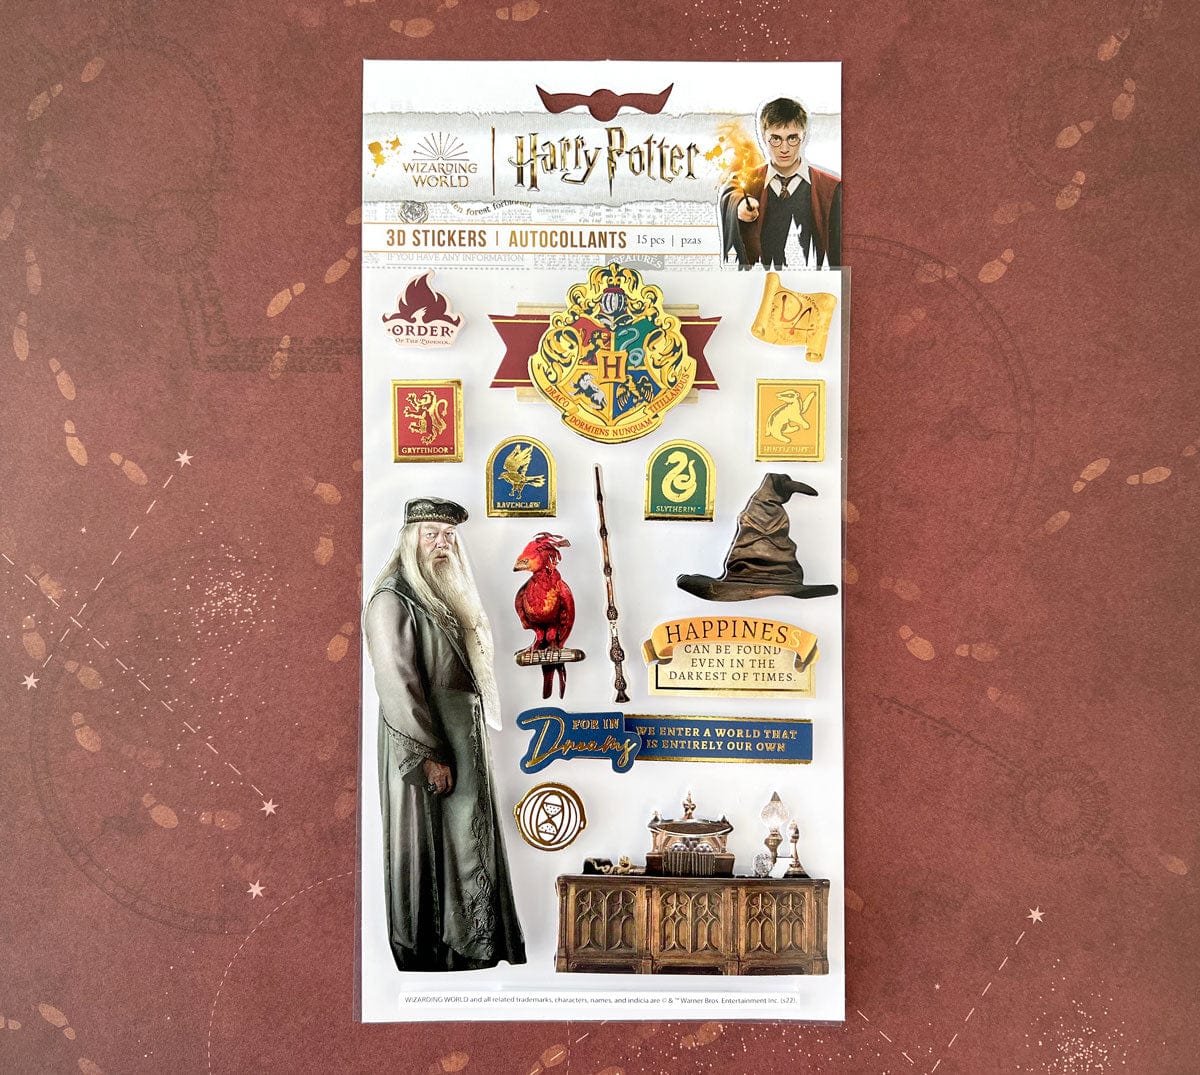 Harry Potter Stickers - Gryffindor House Pride Enamel Sticker